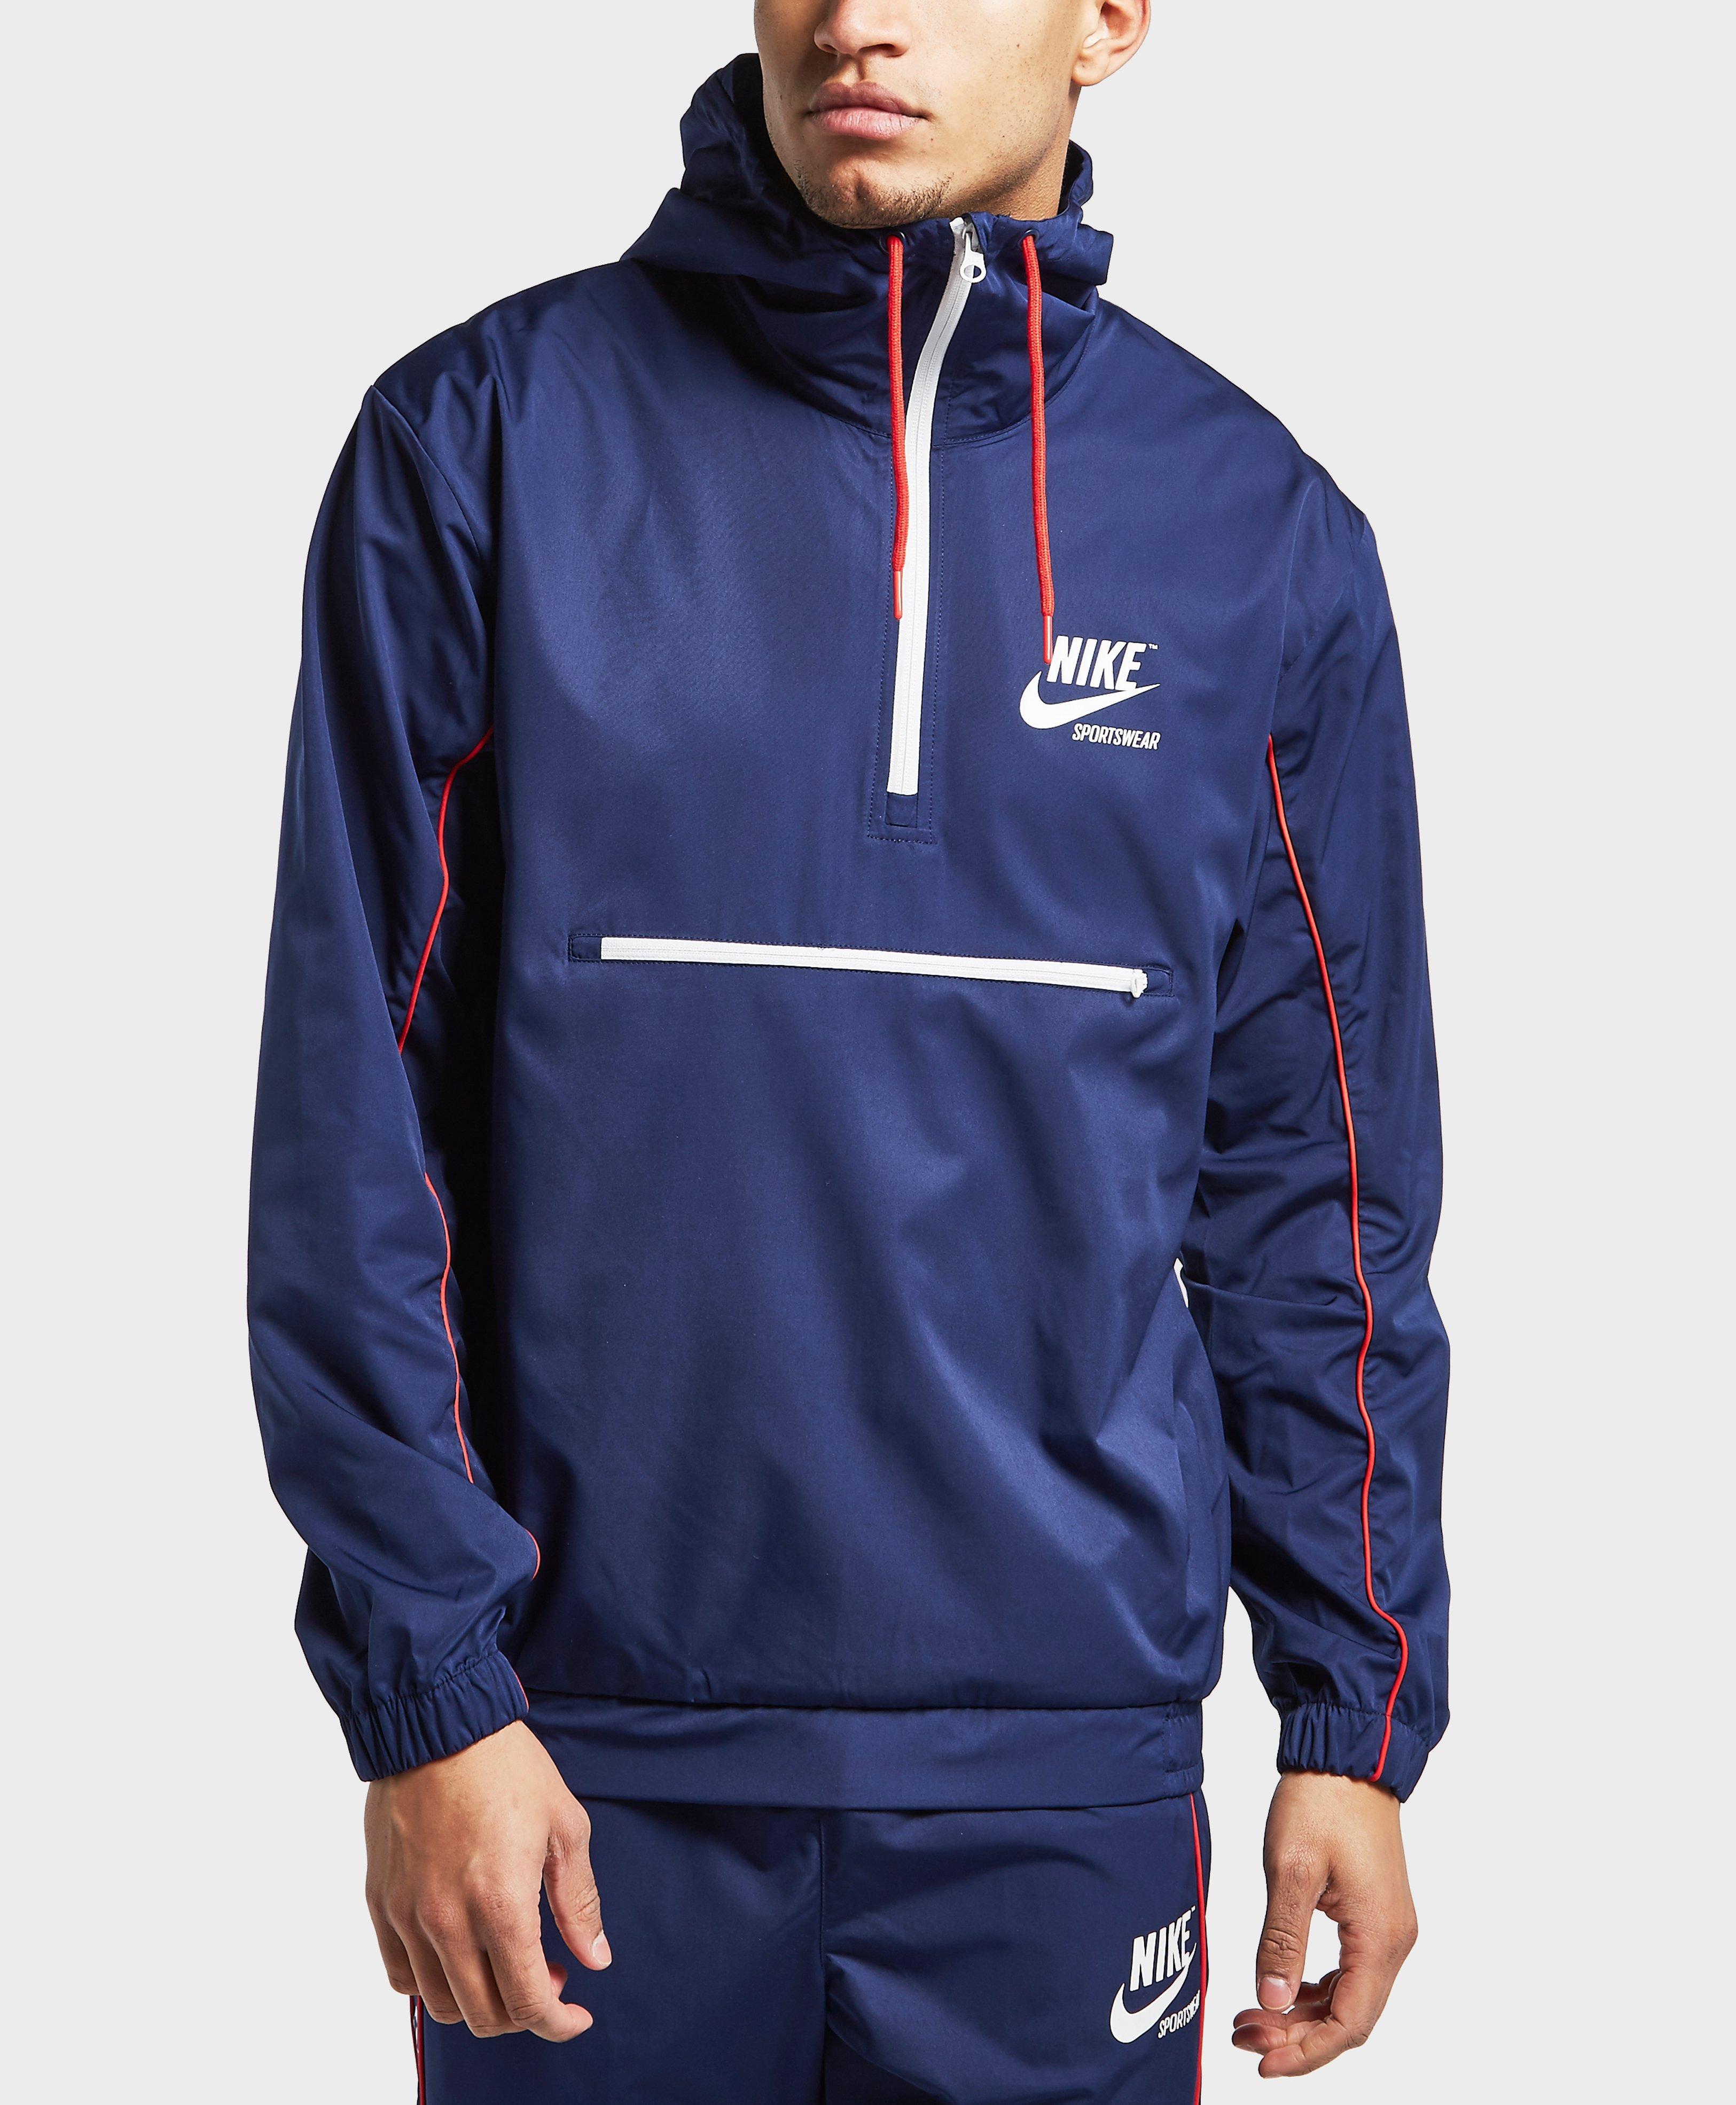 Nike Synthetic Archive Woven Half Zip Jacket in Blue for Men - Lyst